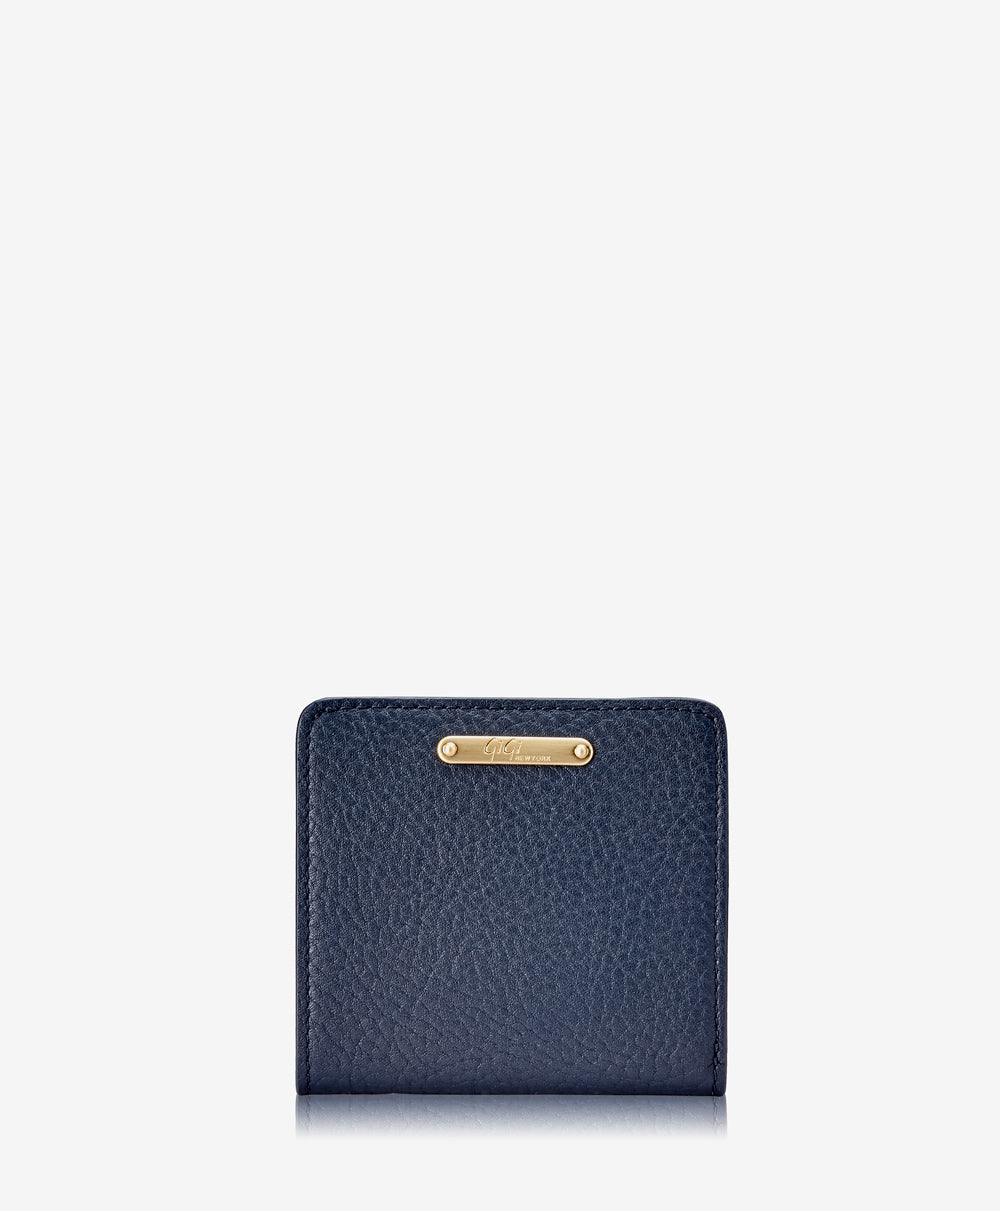 GiGi New York Mini Foldover Wallet Navy Pebble Grain Leather